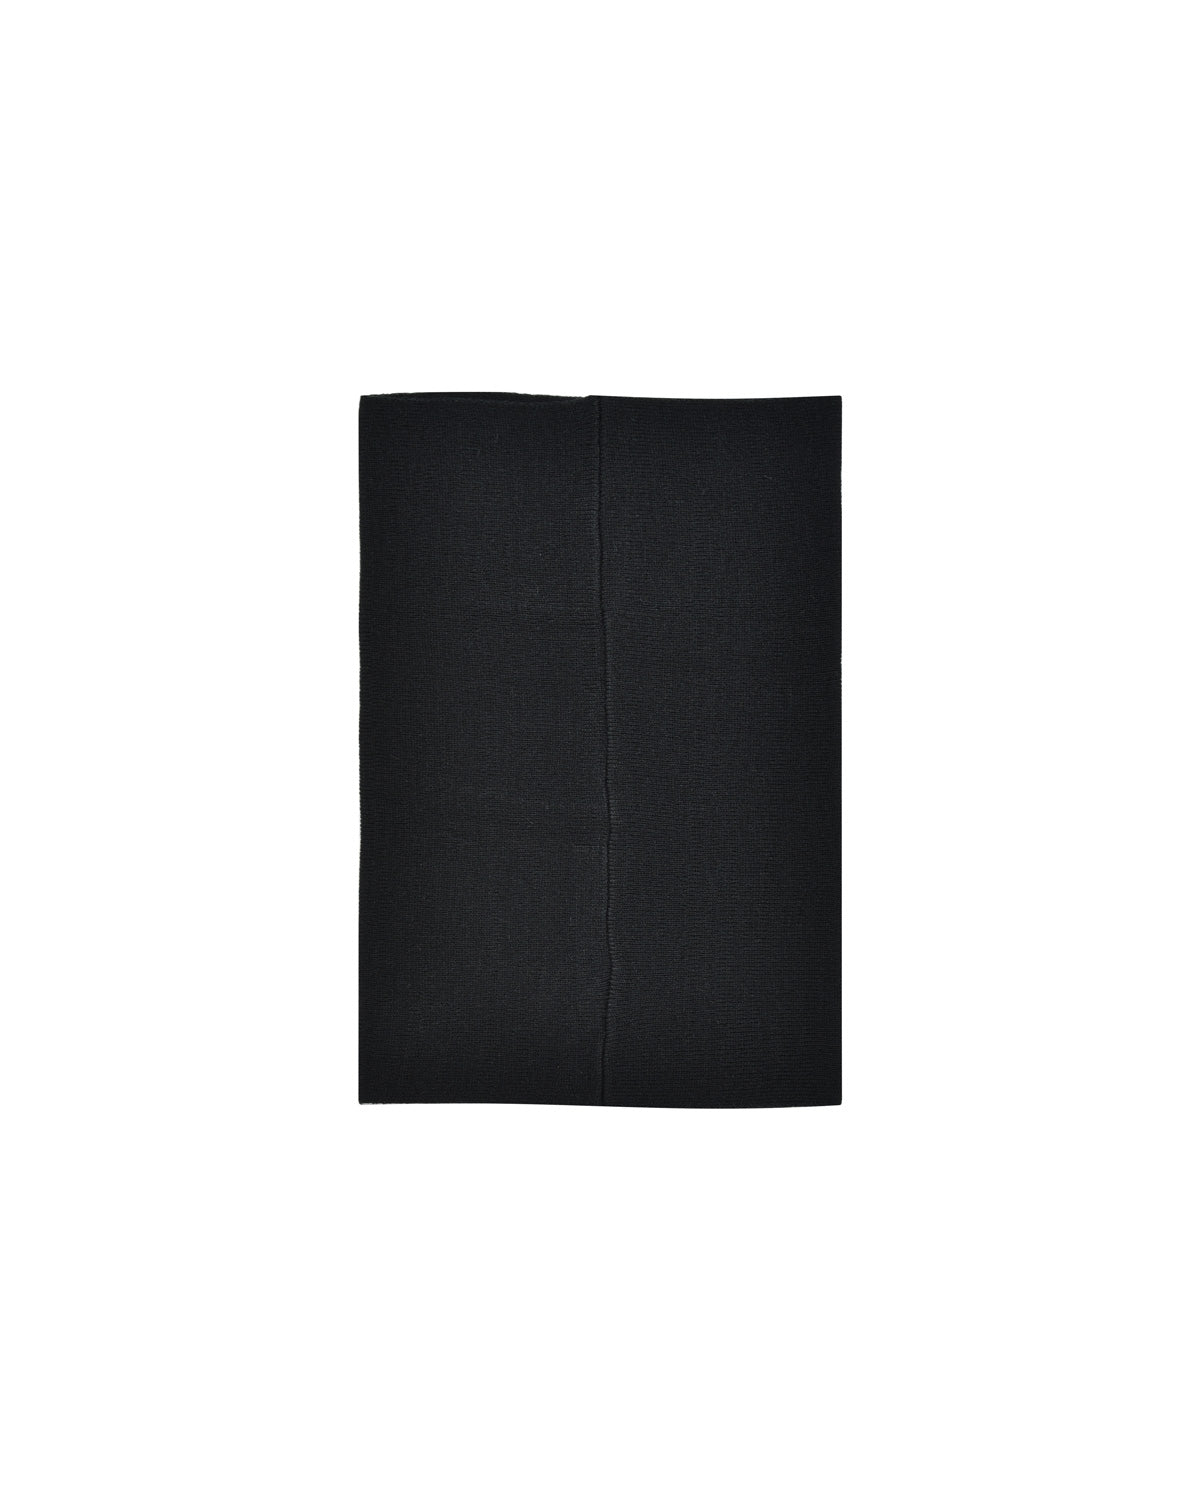 Black stockinette knit neck warmer with logo patch